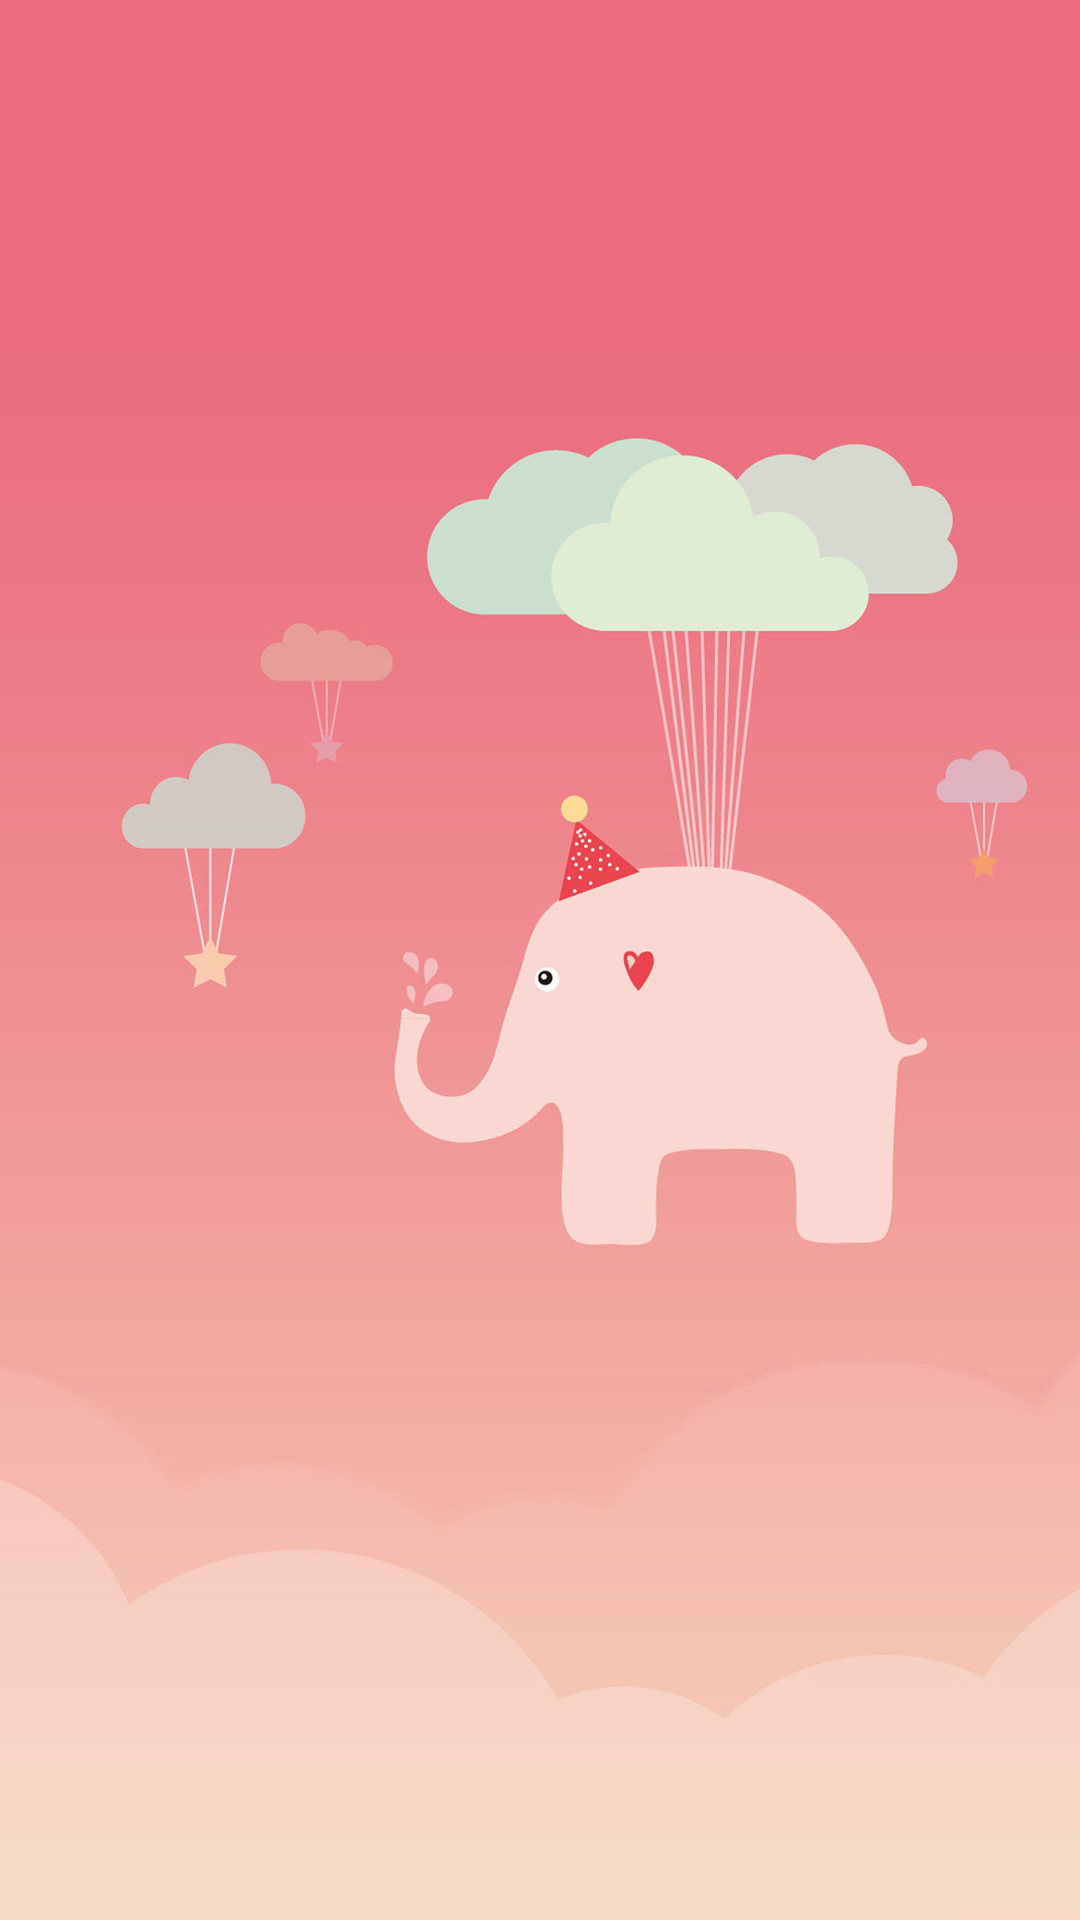 Cute Elephant iPhone 6 Wallpaper Download iPhone Wallpapers, iPad